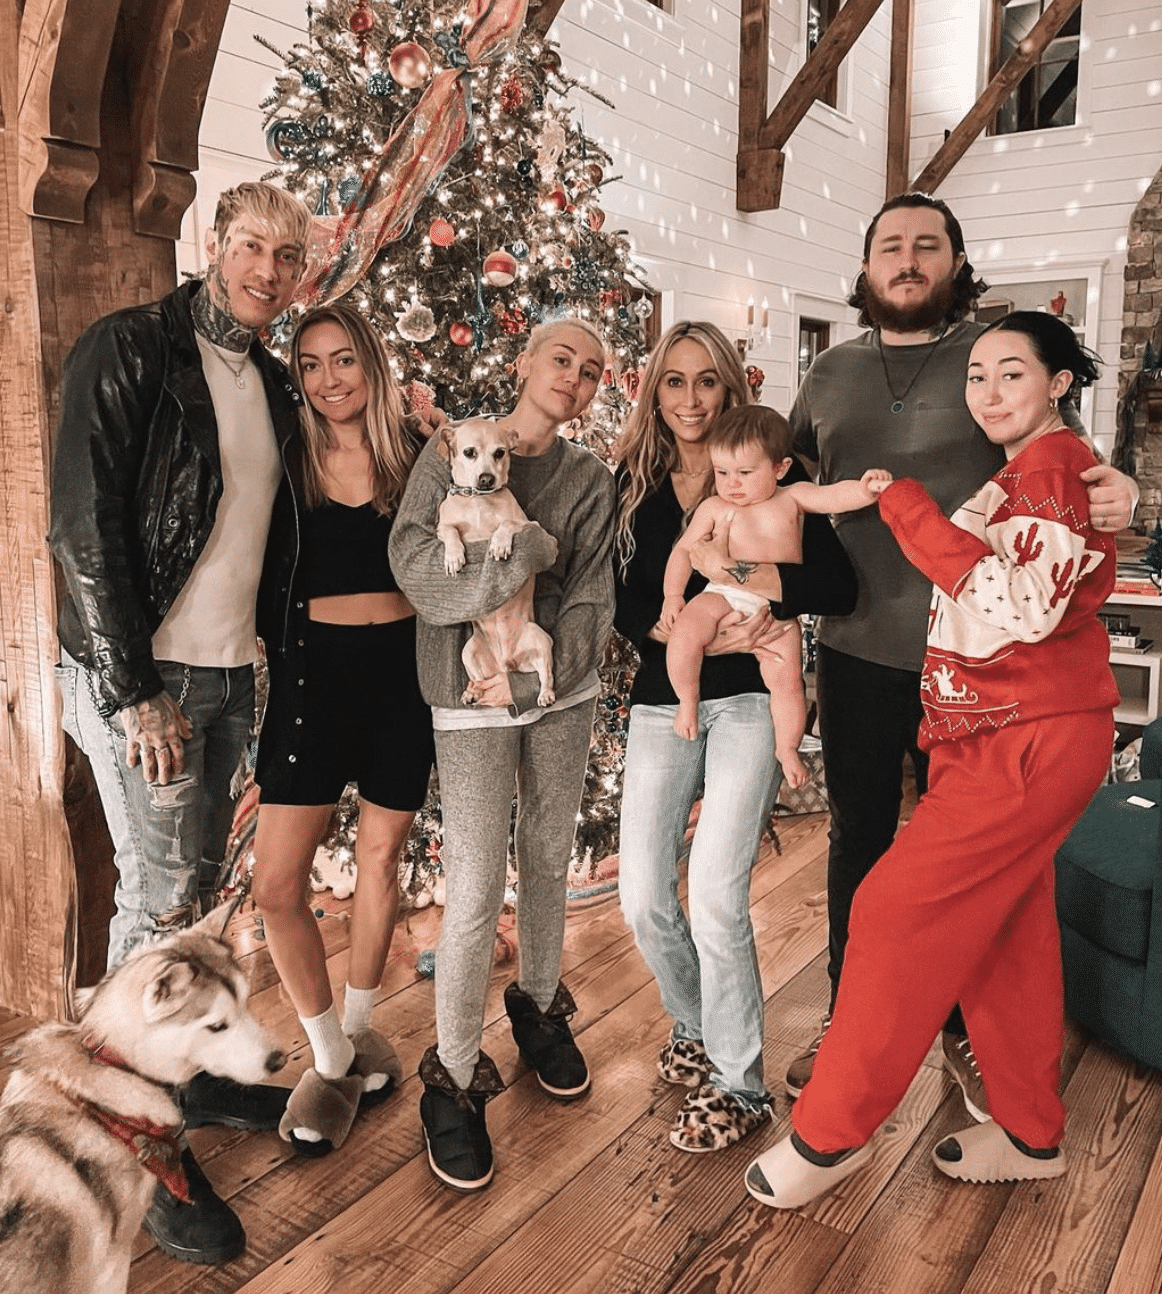 The Cyrus clan at Christmas.